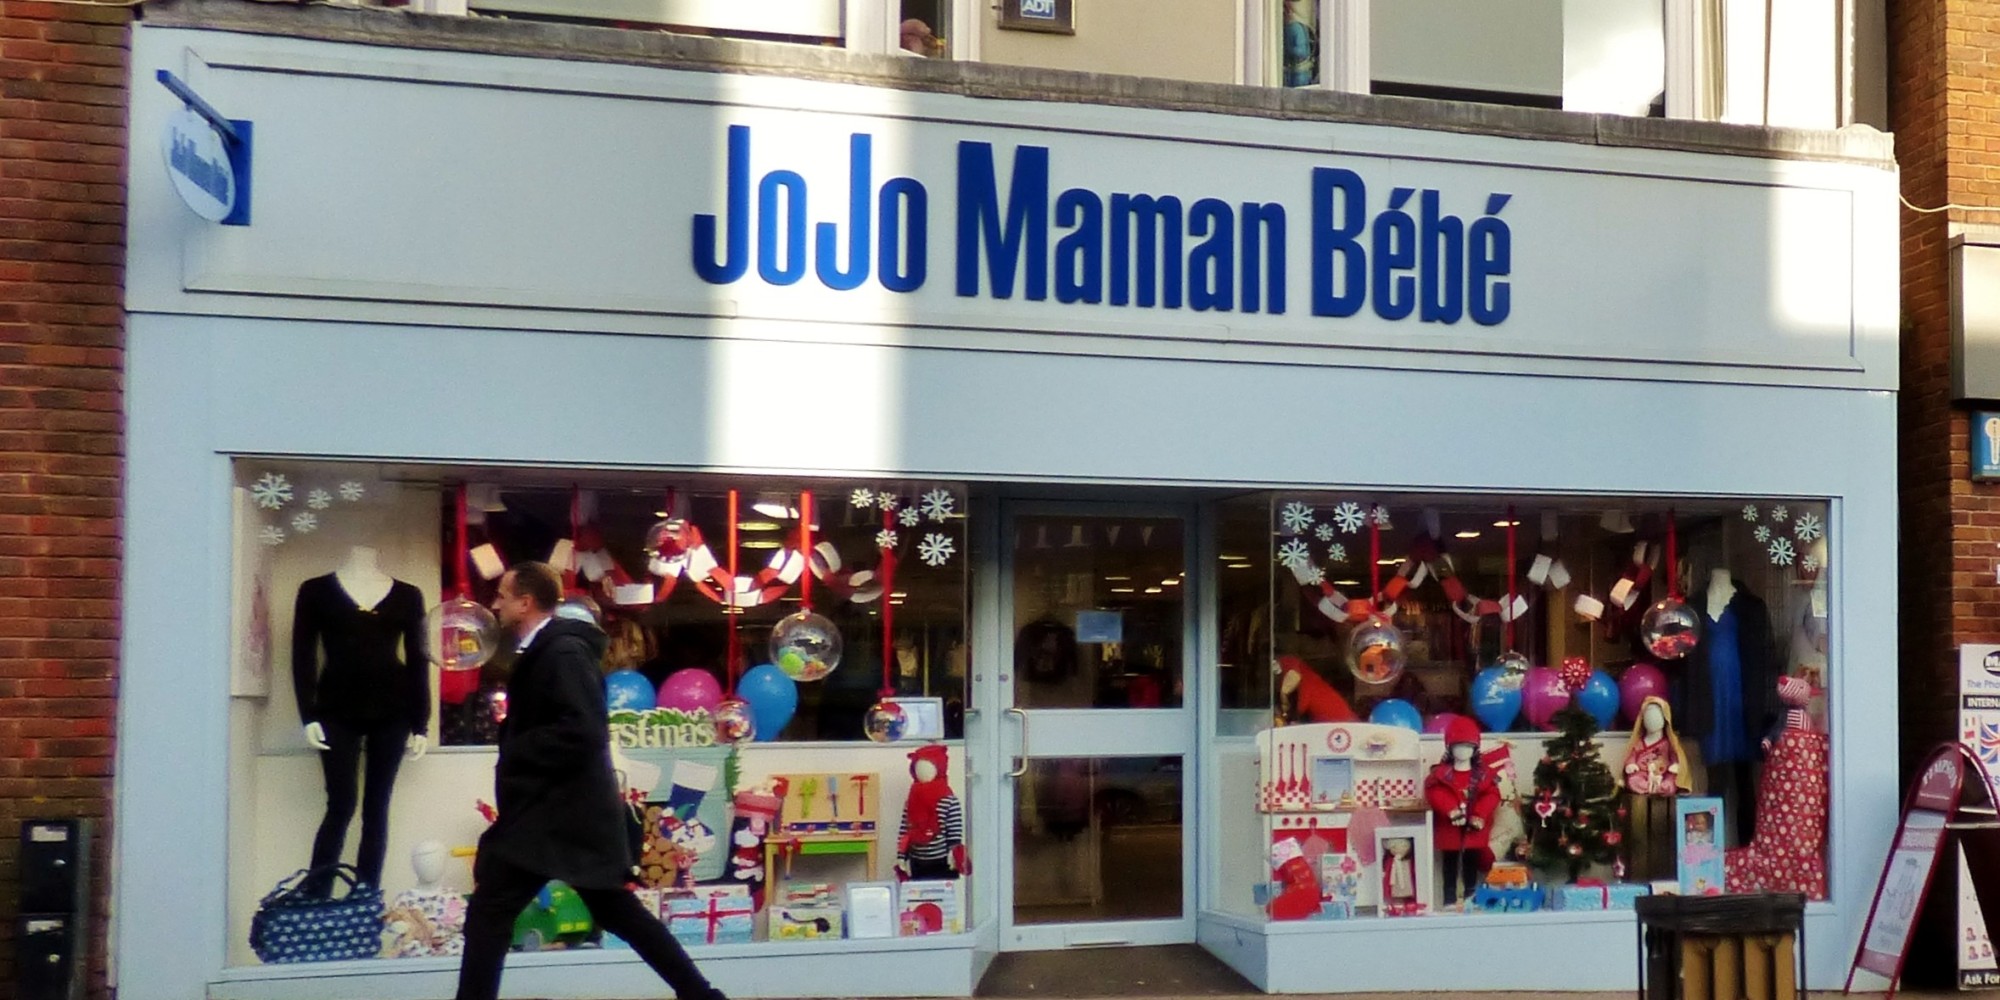 'Our Customers Have Always Understood' JoJo Maman Bebe Founder Explains